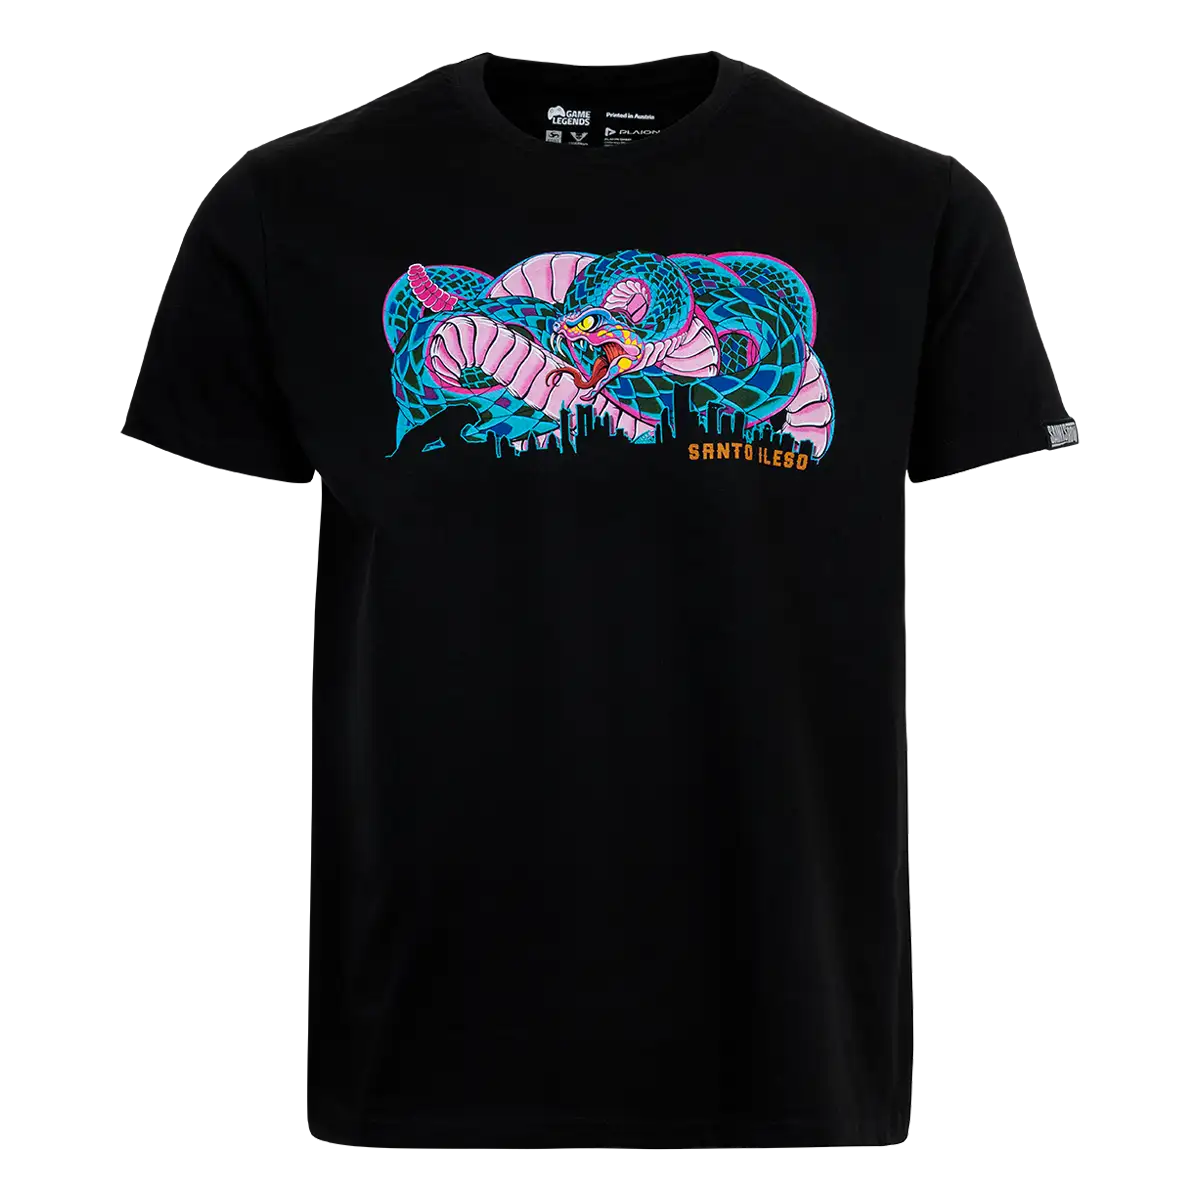 Saints Row T-Shirt "Viper" Black